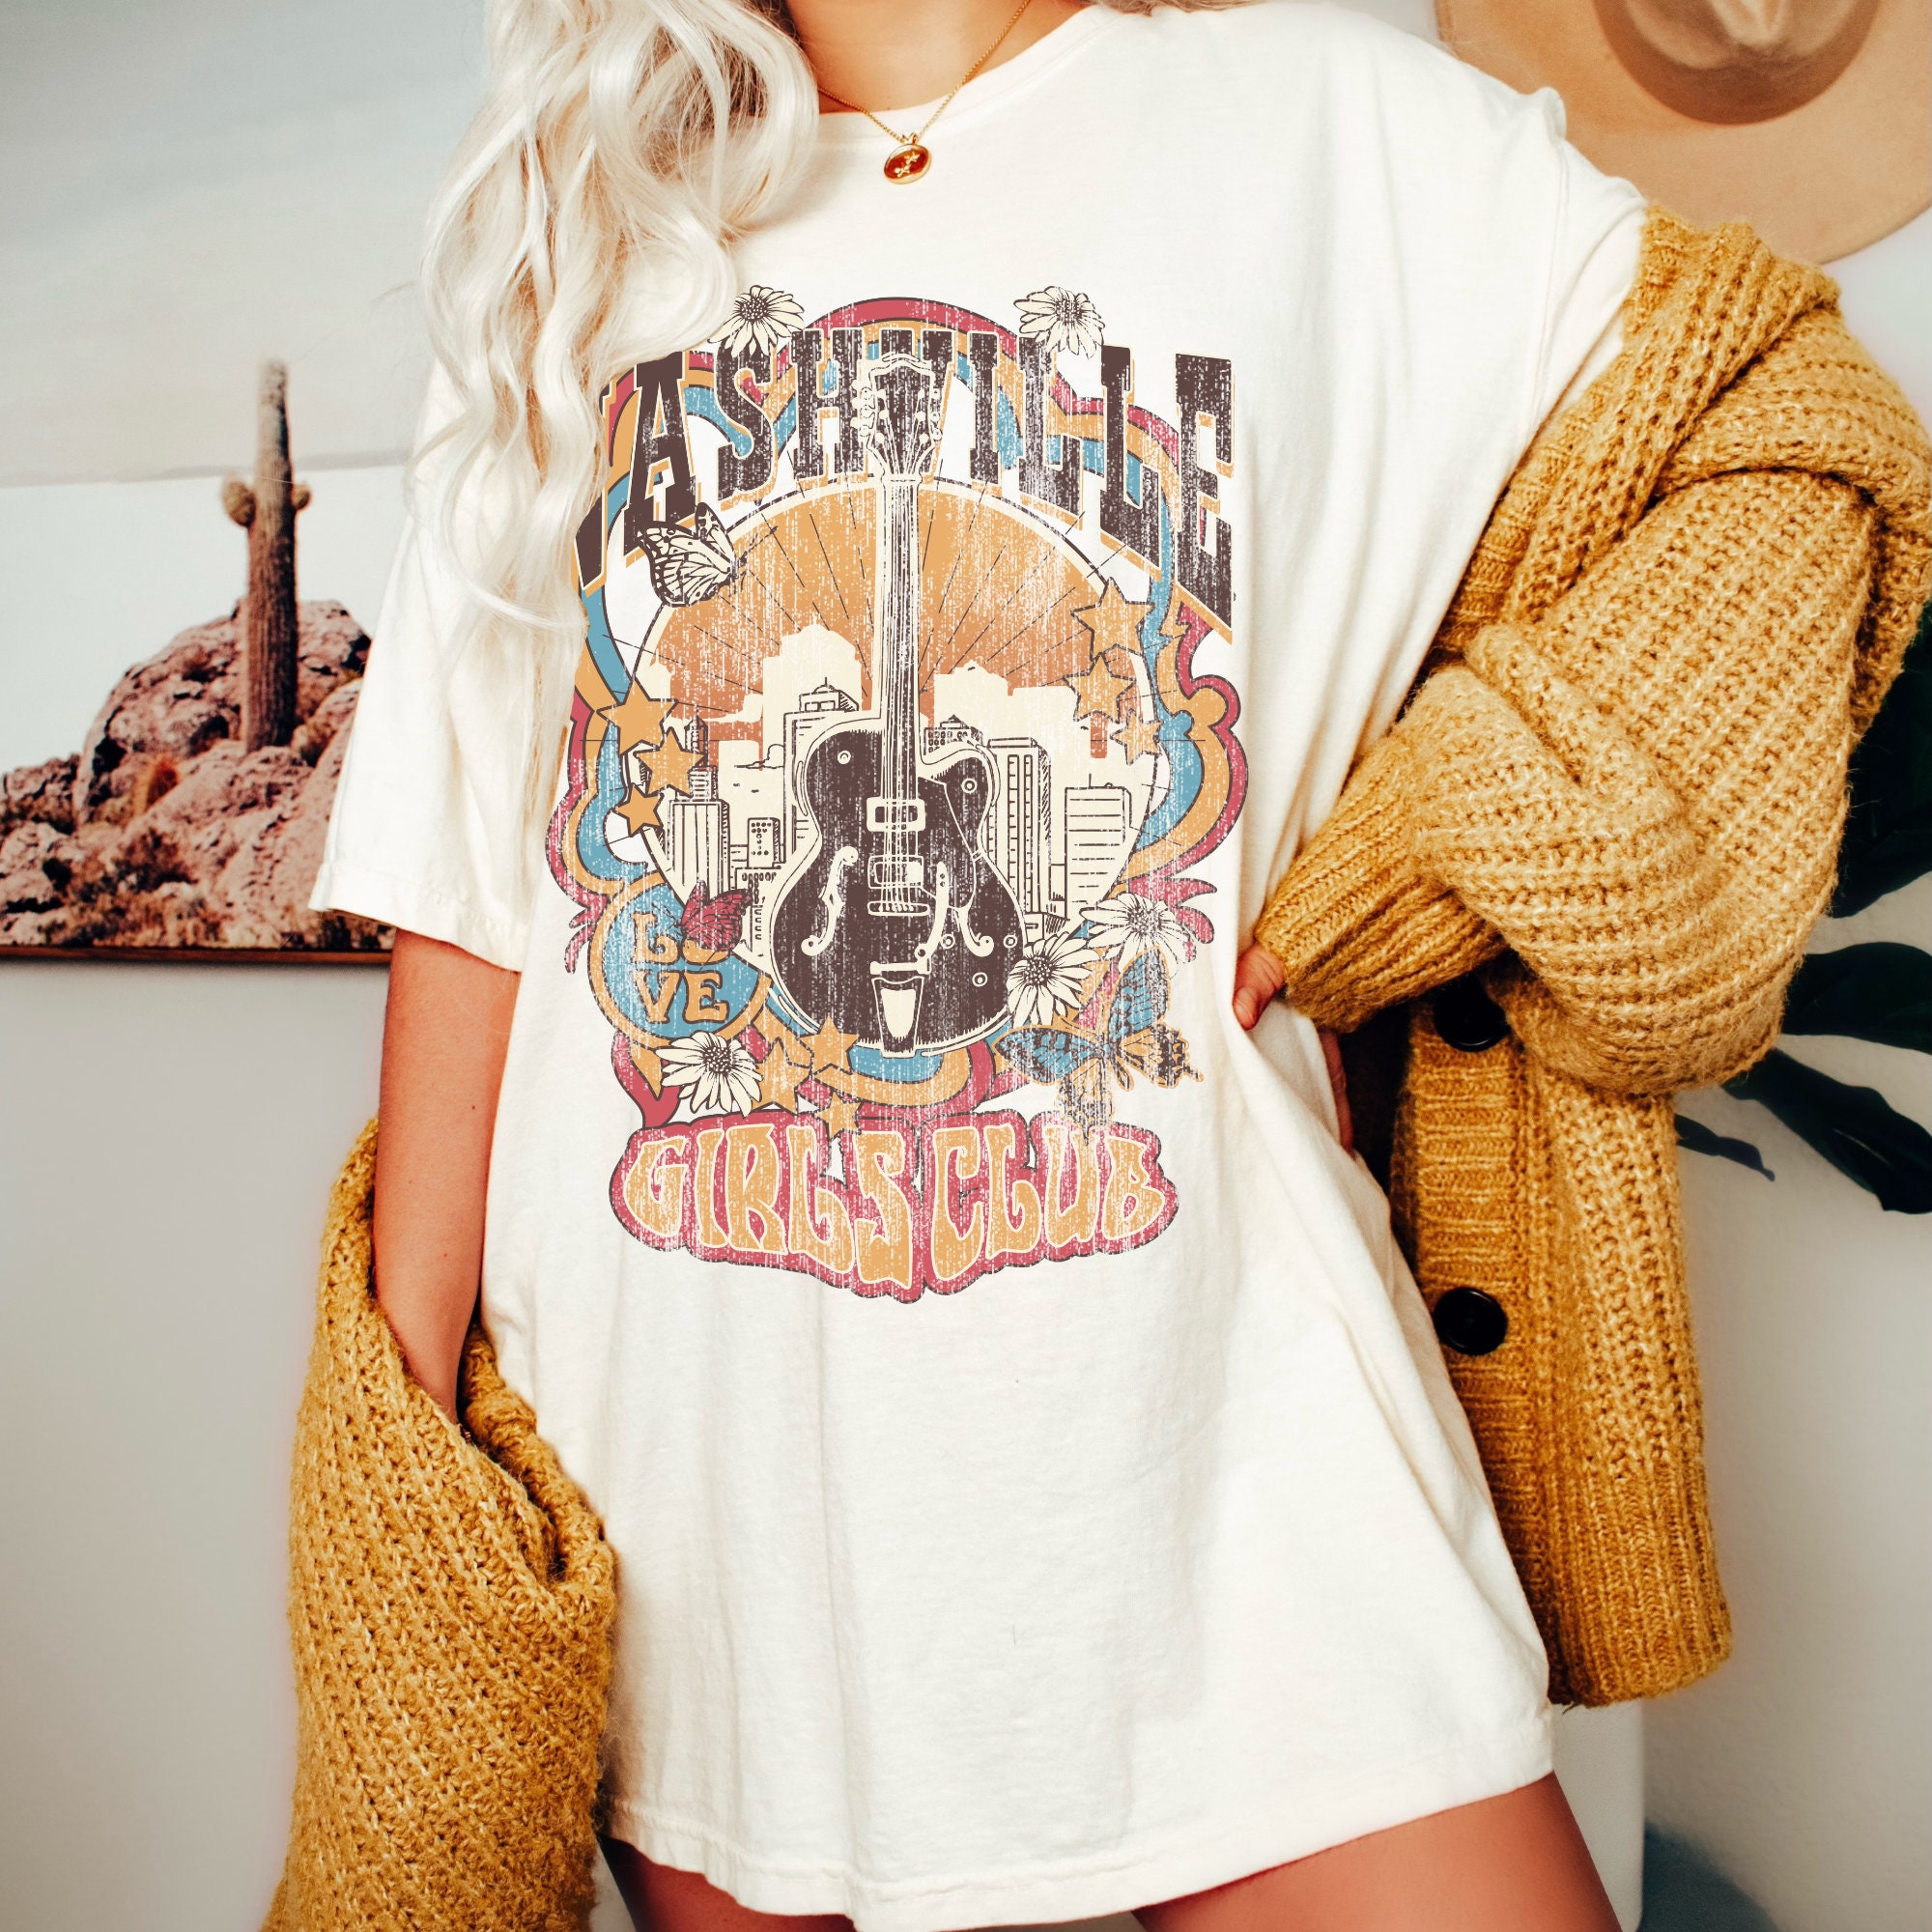 Discover Nashville Girls Club Vintage Style Tee, Retro Style T-Shirt